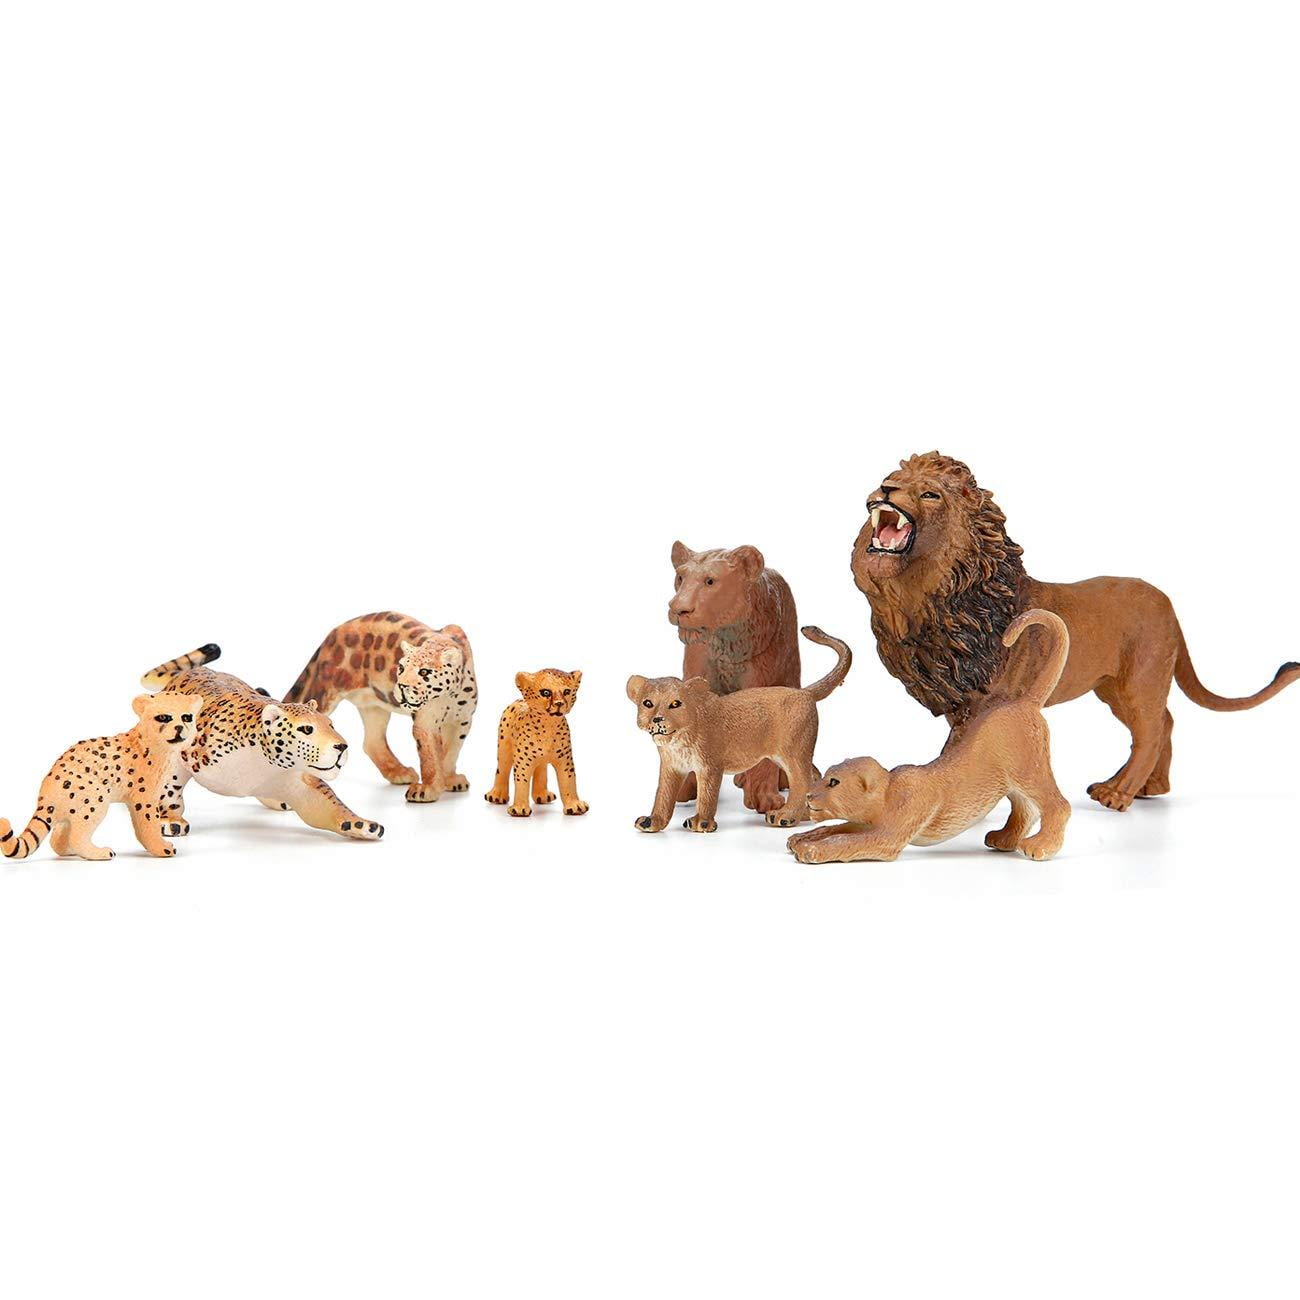 Kids Zoo Animal Figure Play Set Toys Safari 14 Pc Wild Realistic Gift New 